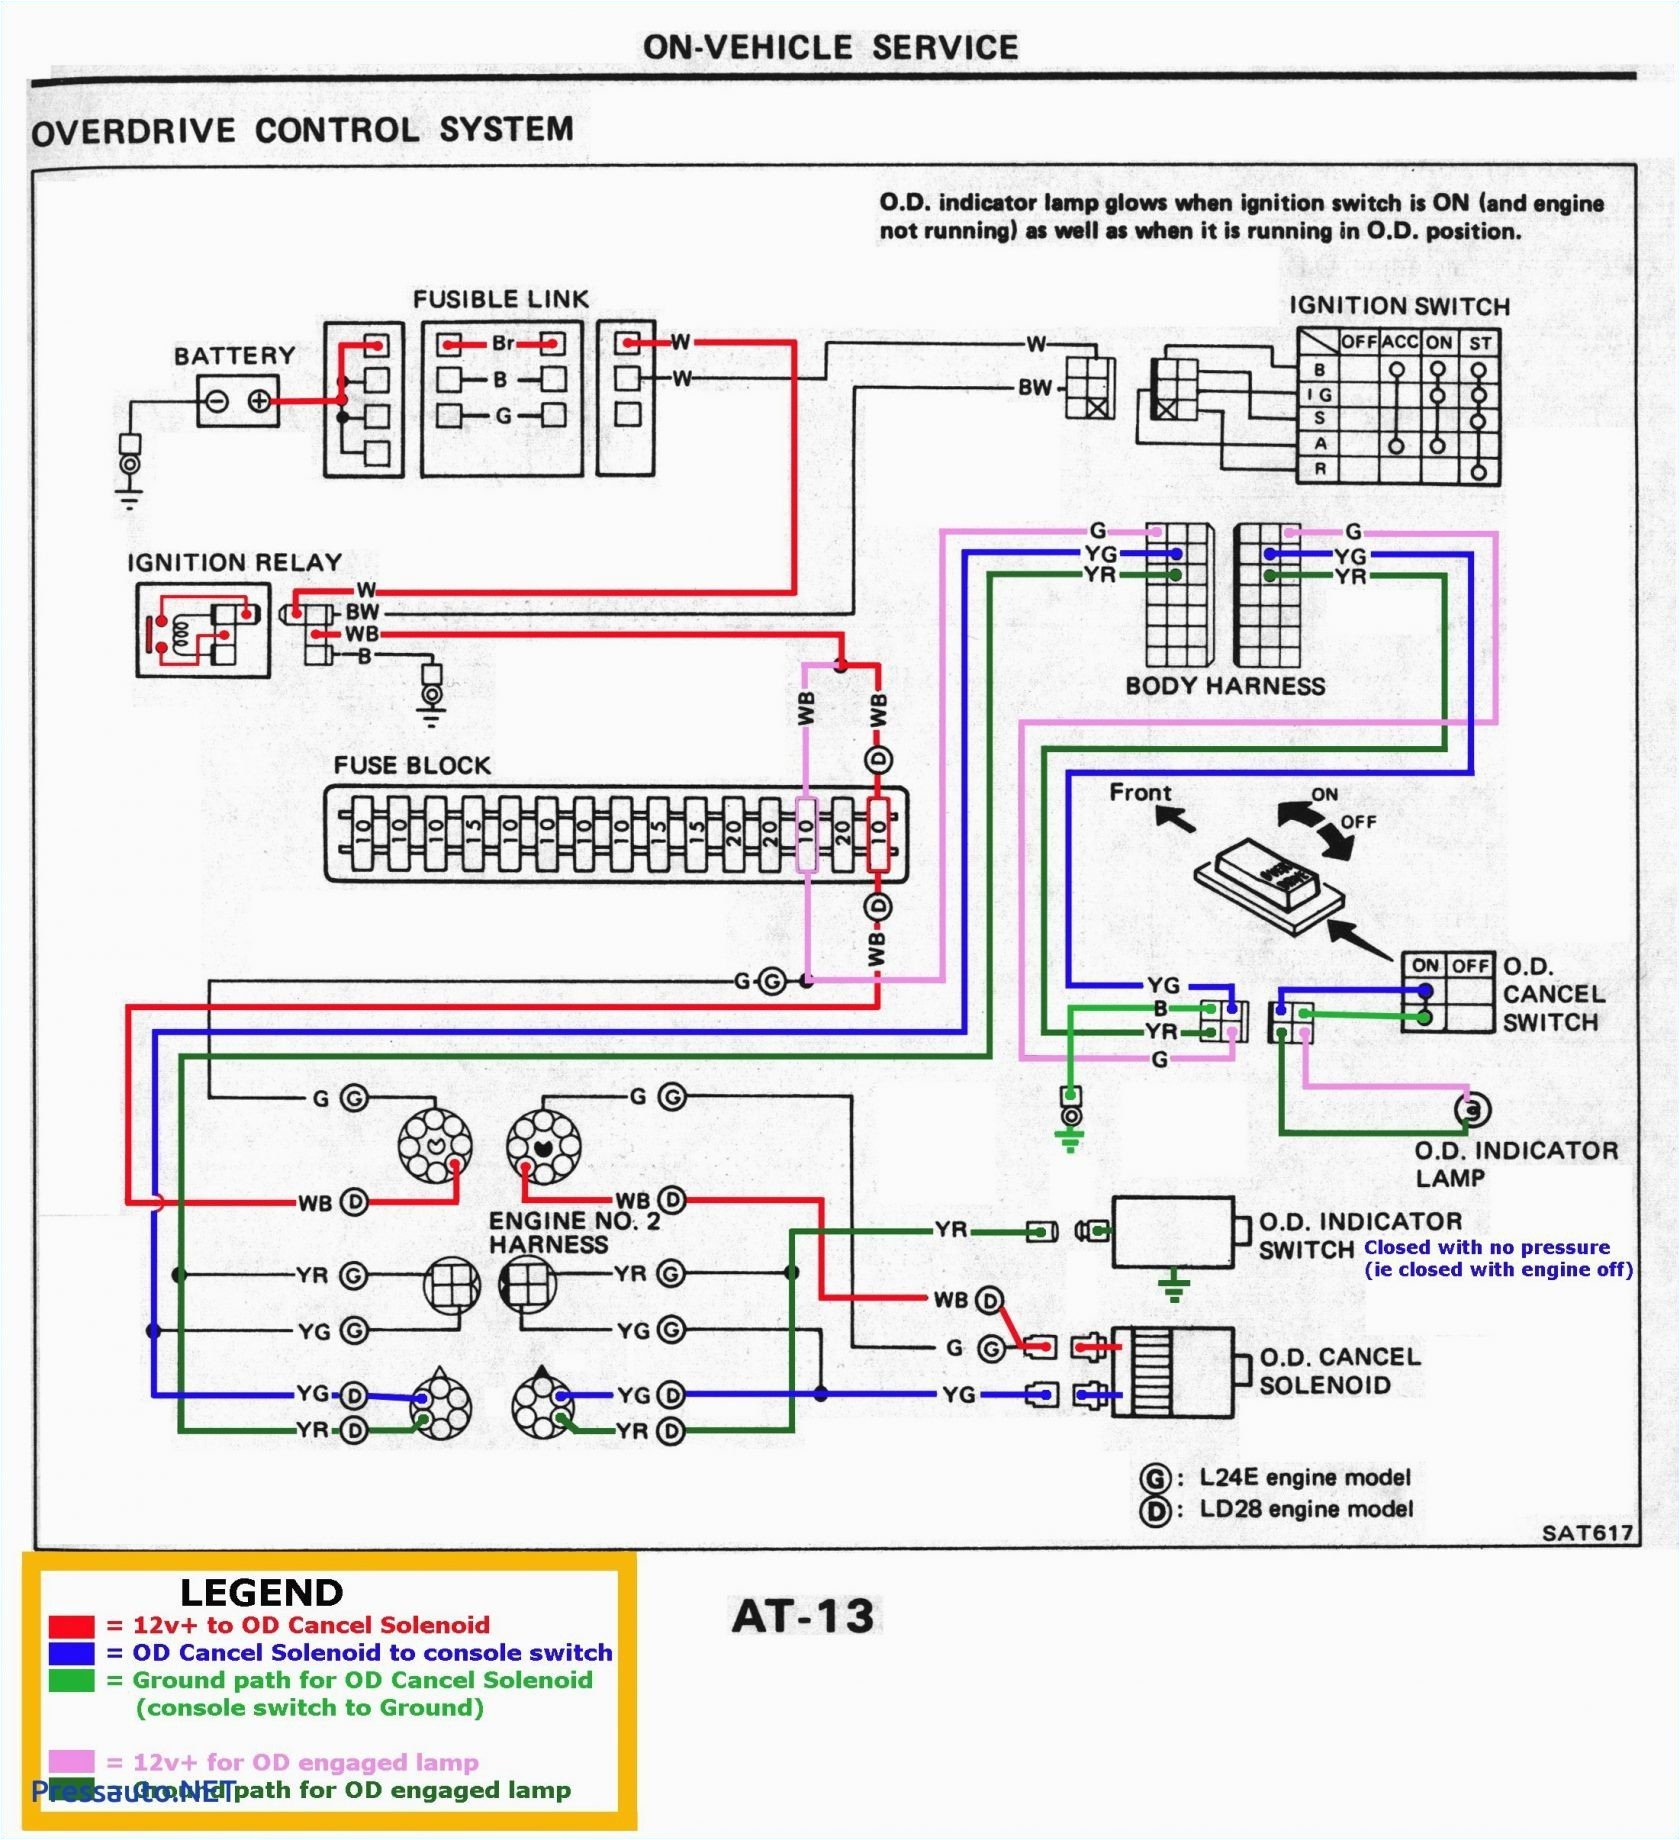 rcs tbz48 thermostat wiring diagrams wiring diagram guide for dummies rcs tbz48 thermostat wiring diagrams